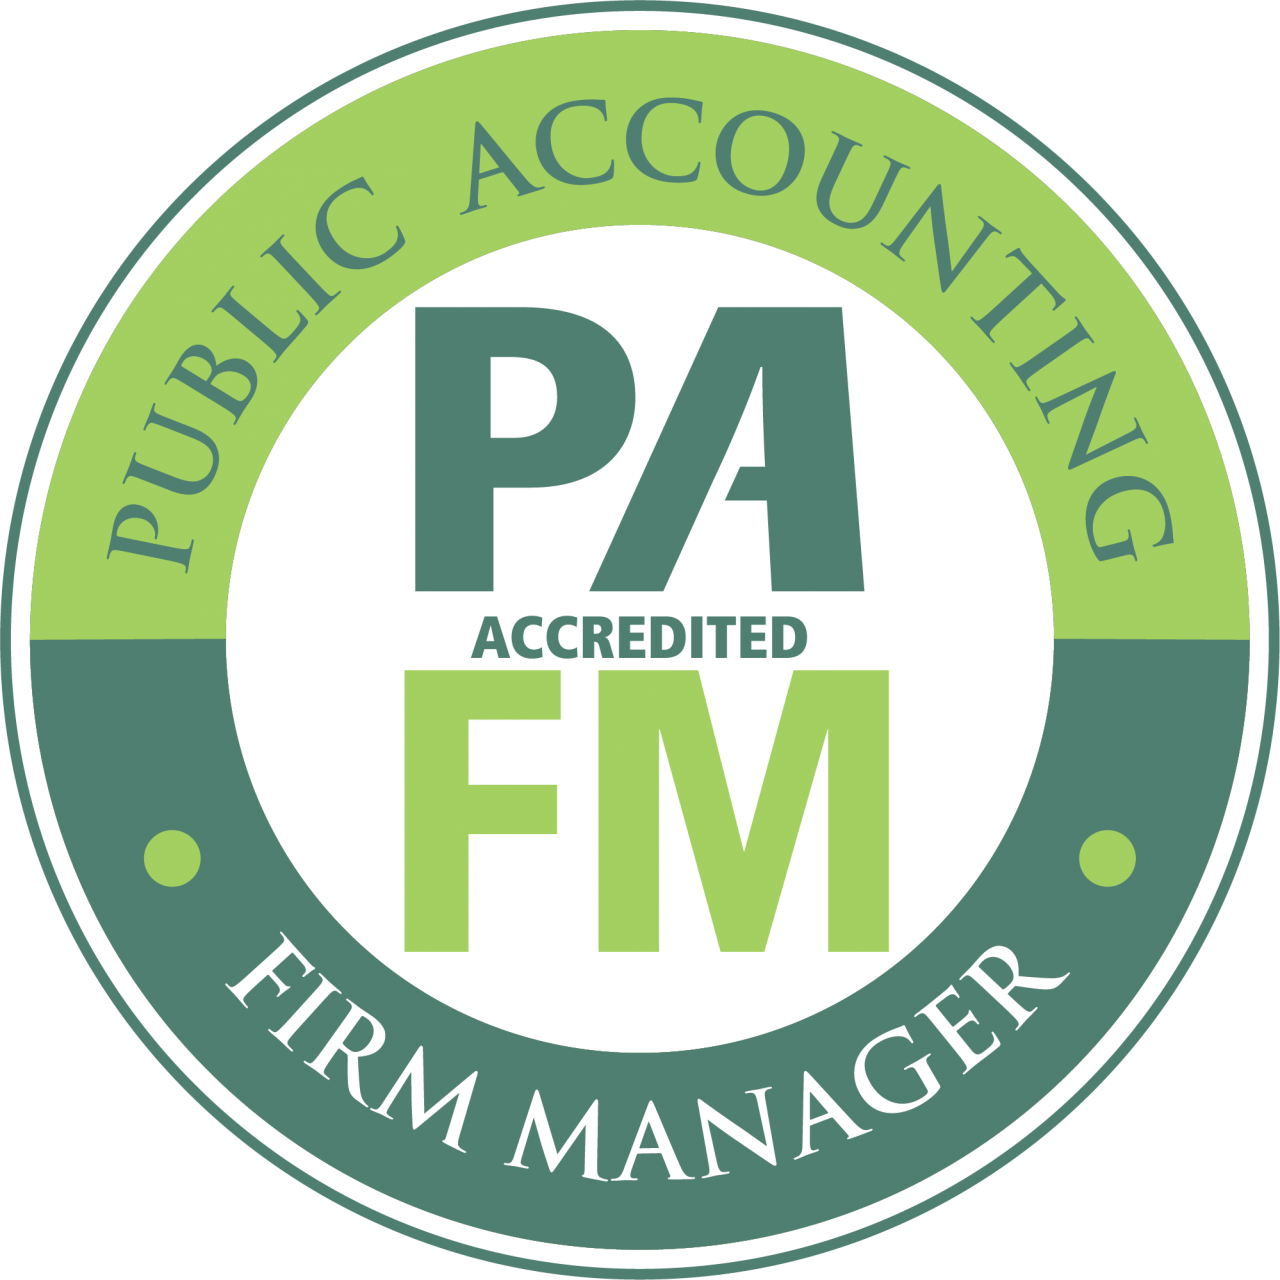 The Association Announces that the AAAPM Designation is Now the PAFM Designation